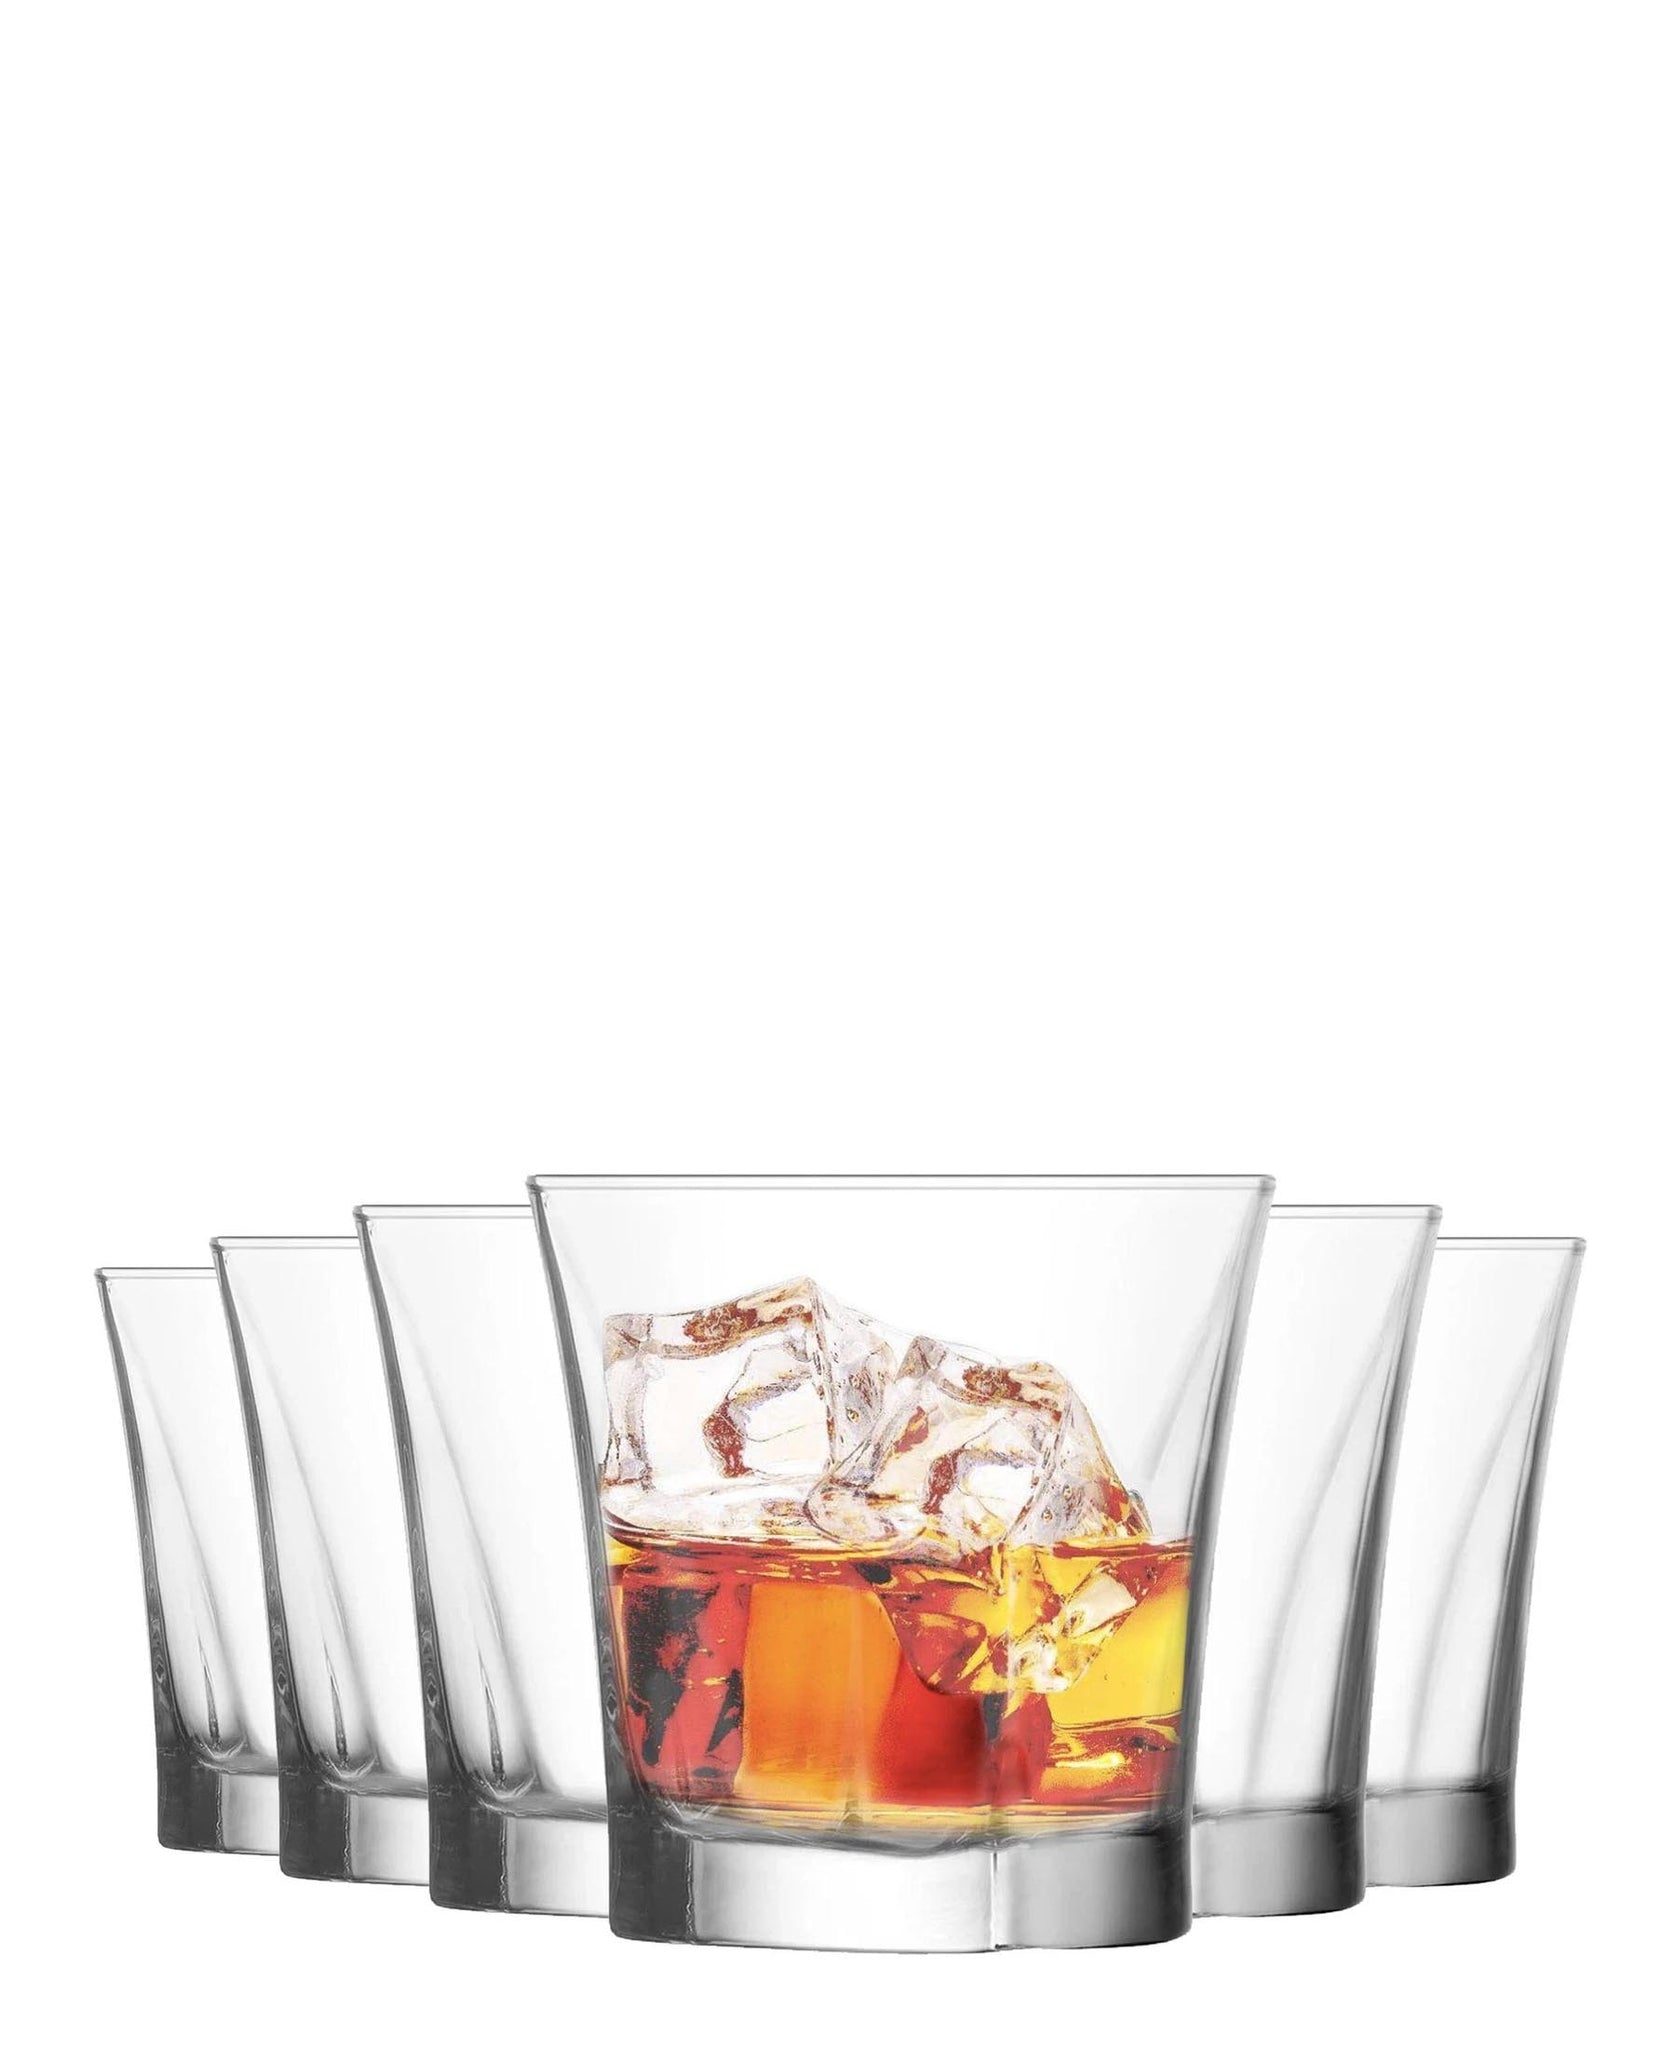 LAV Truva 6 Piece Whiskey Glass - Clear